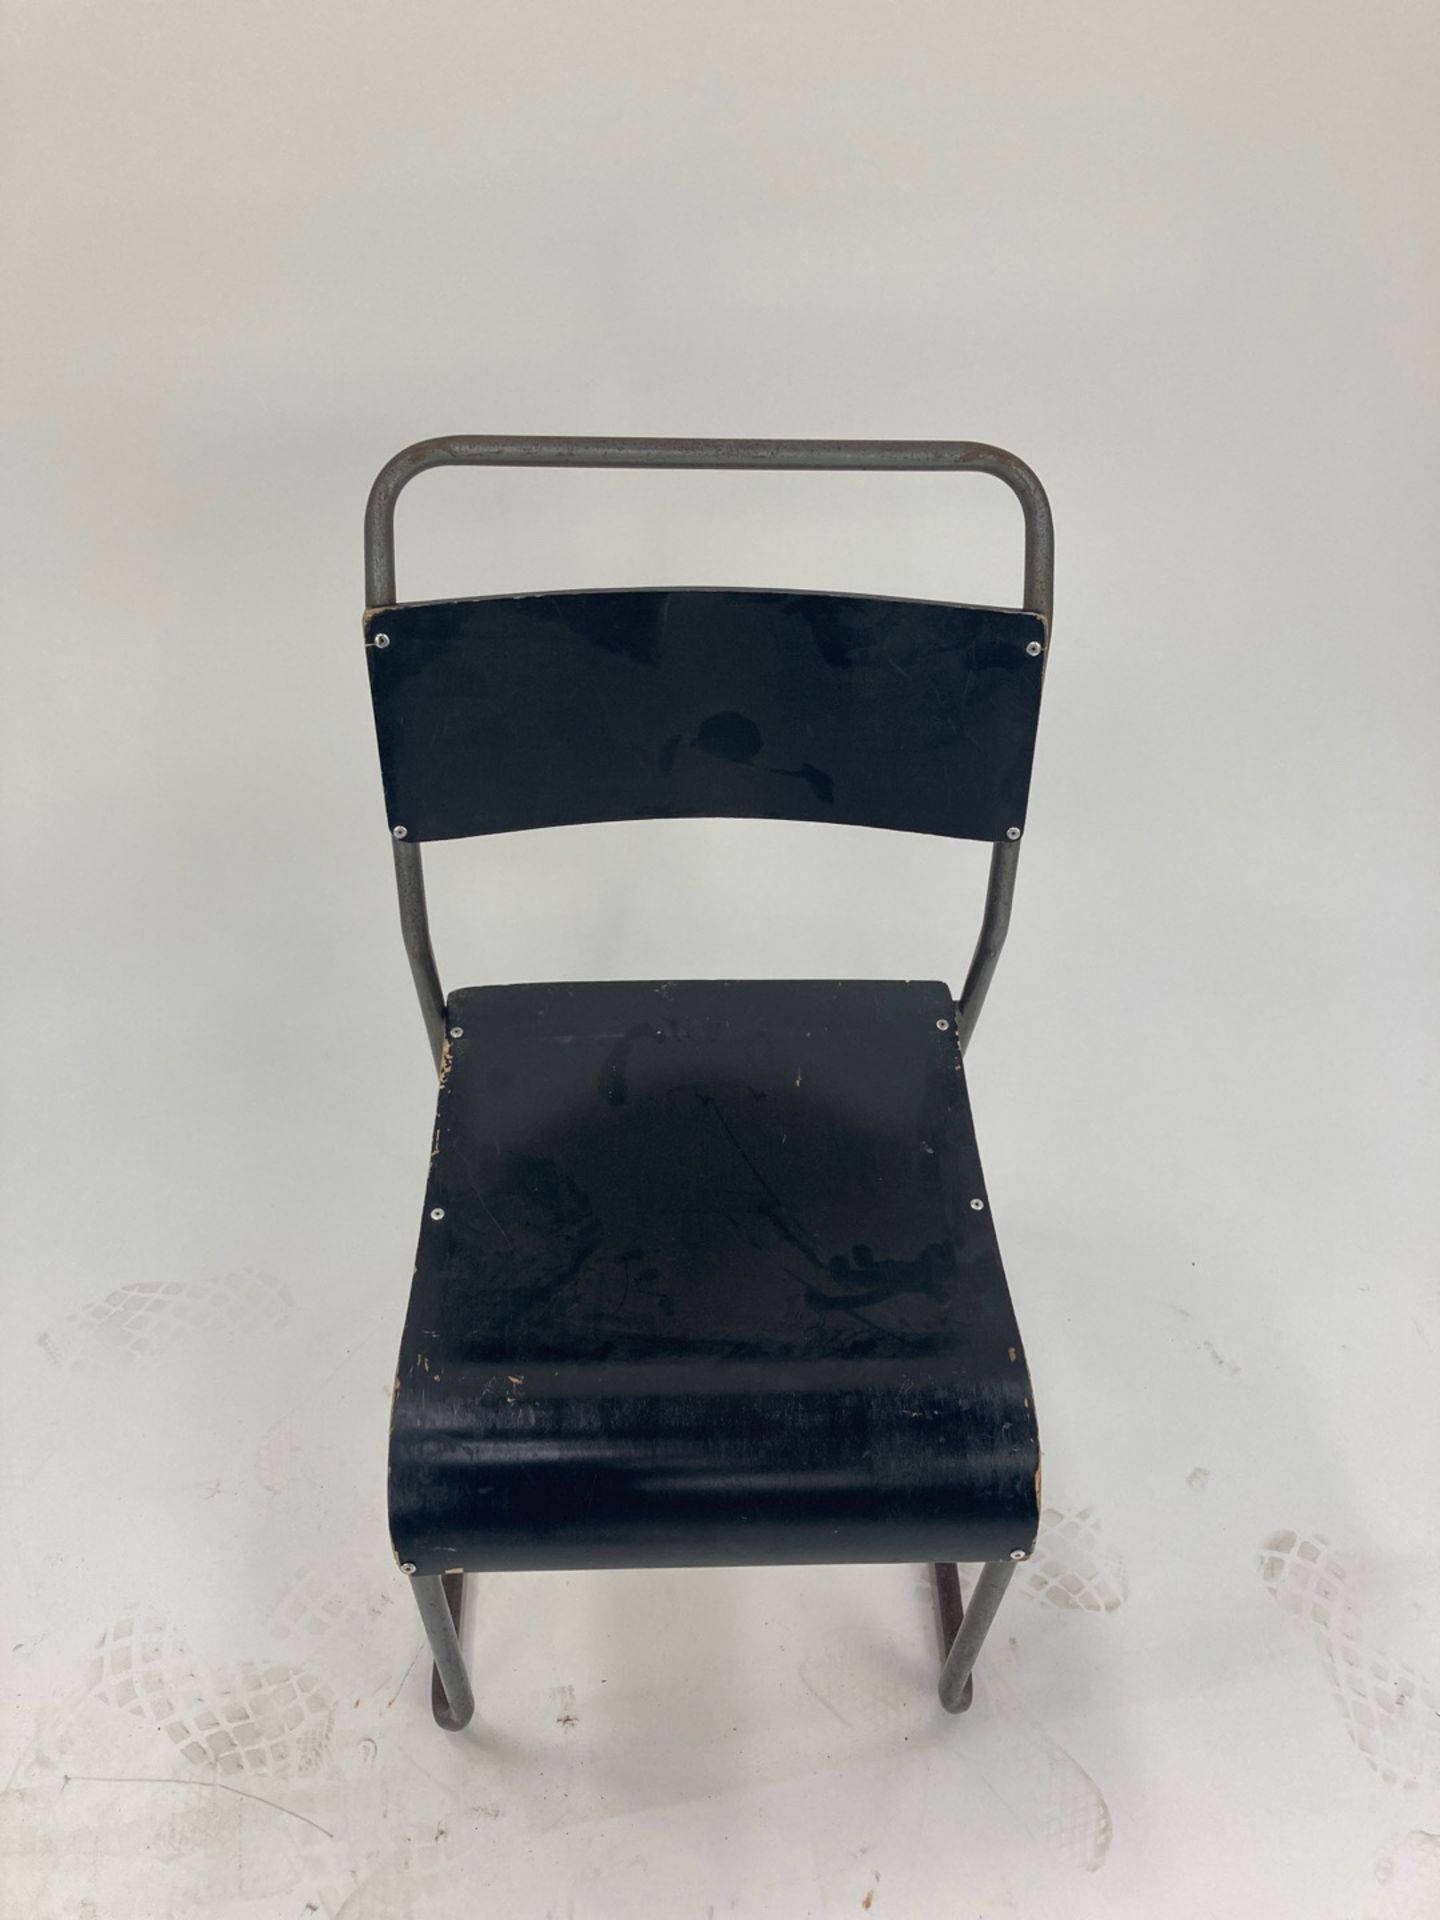 Black wooden chair metal frame